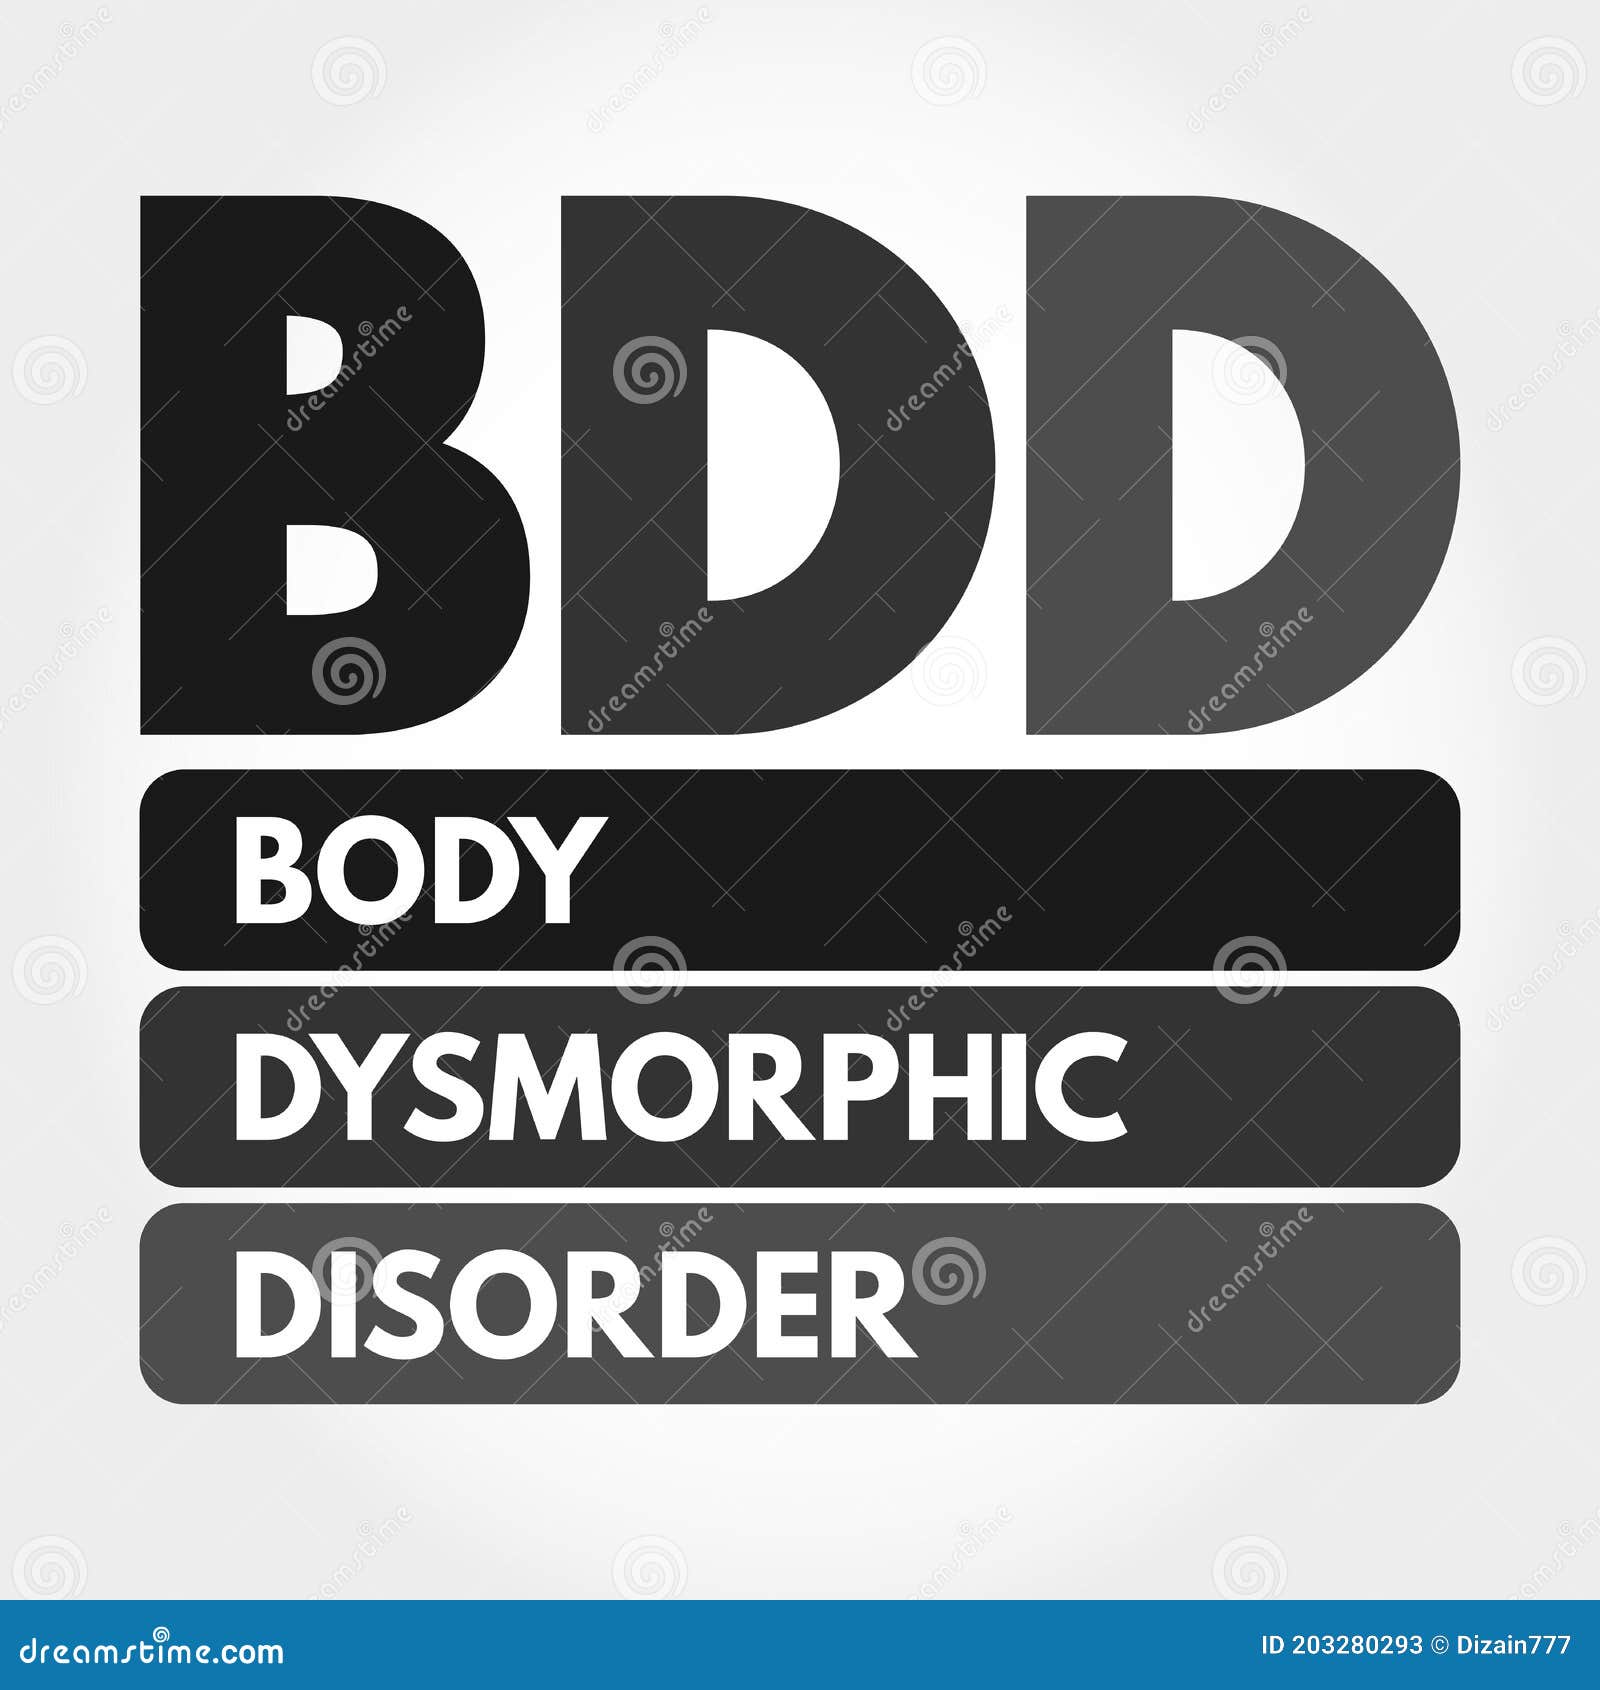 bdd - body dysmorphic disorder acronym